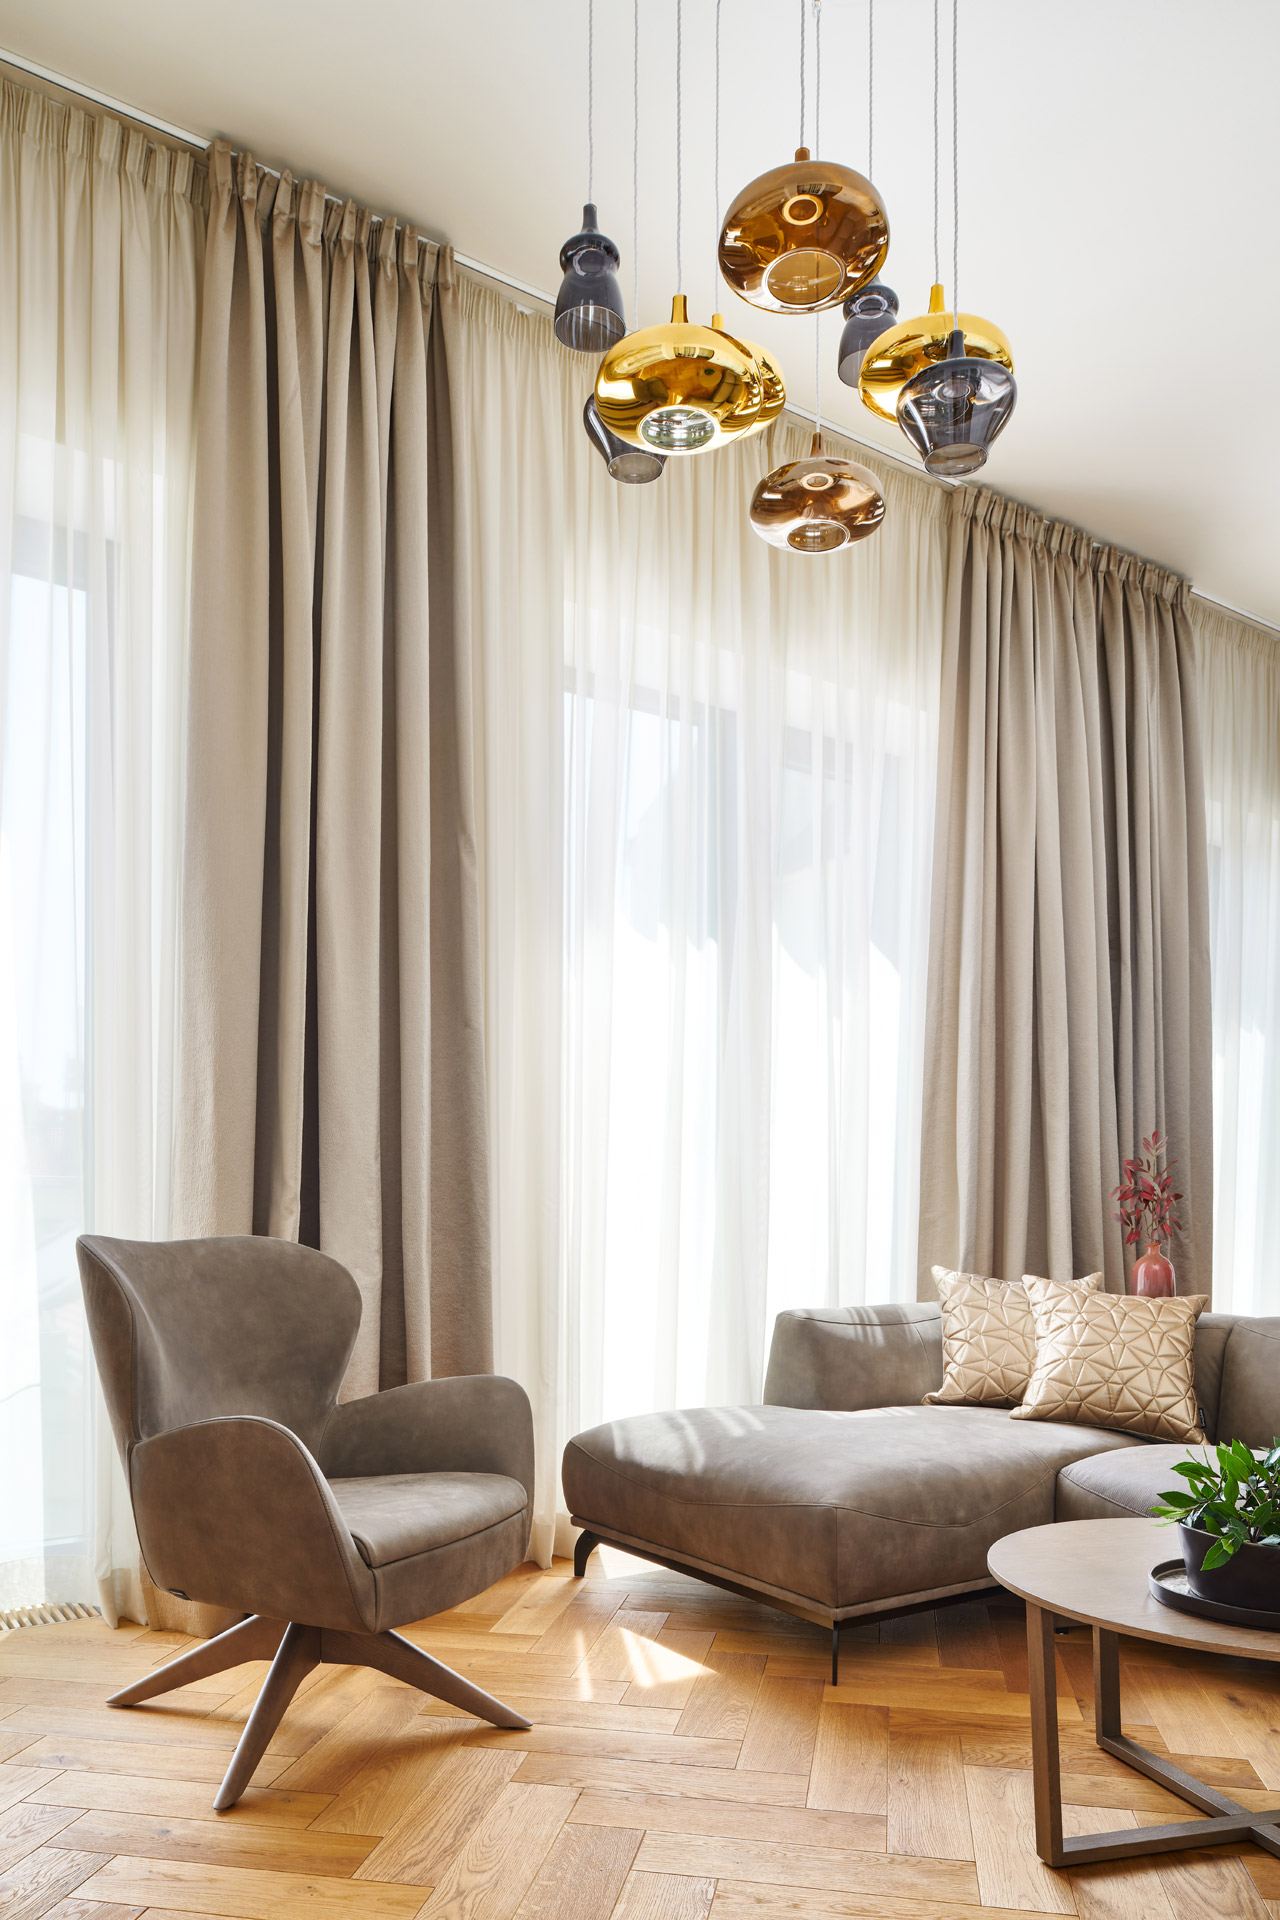 Hanák nábytek, dream living, complete interior